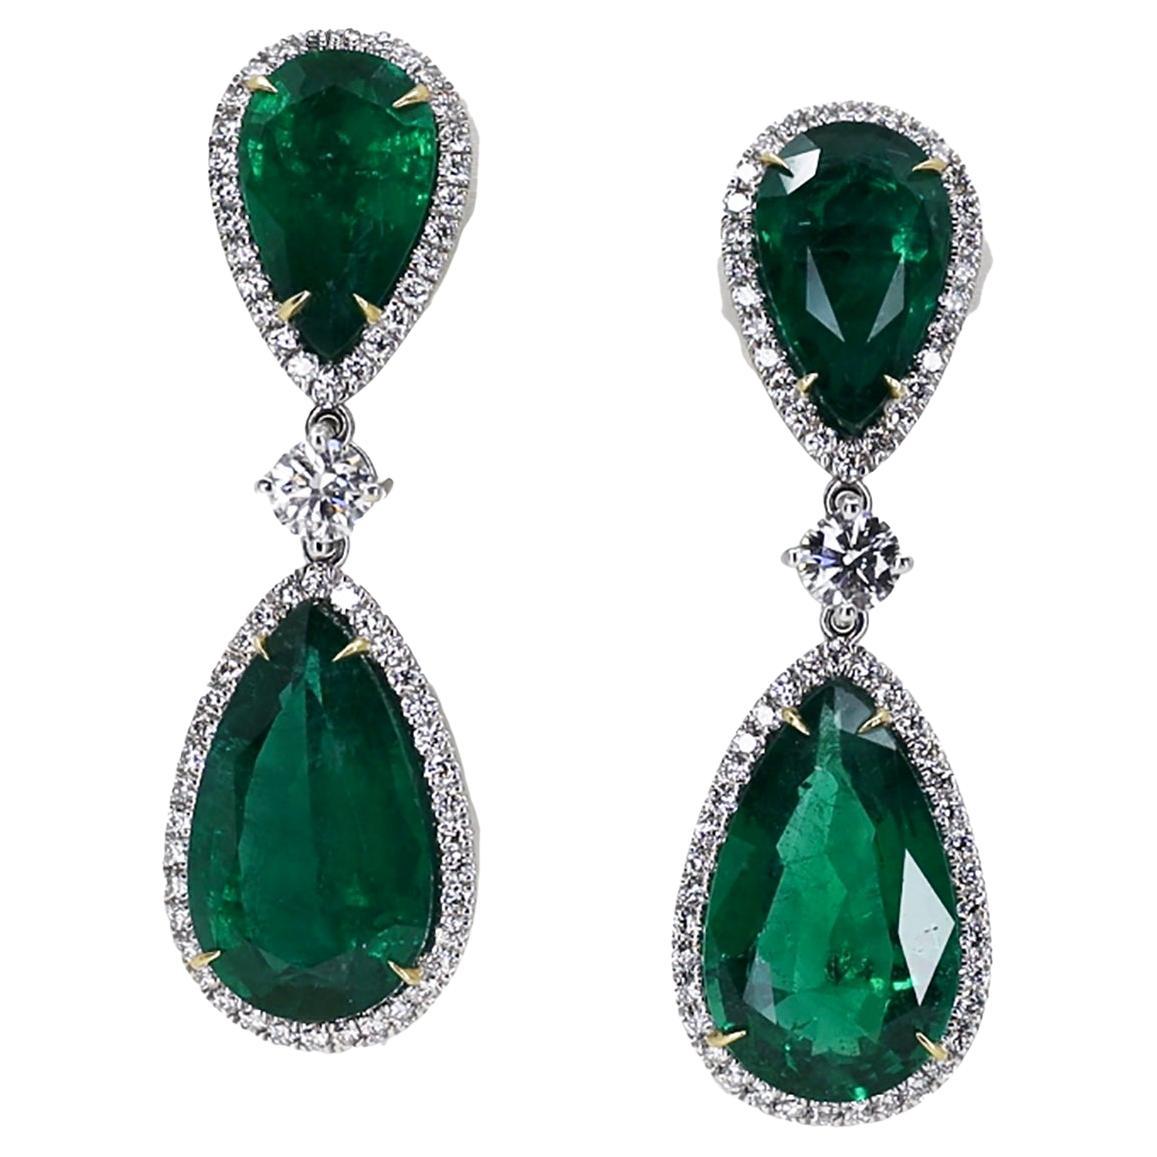 Magnificent Emerald Drop Earrings